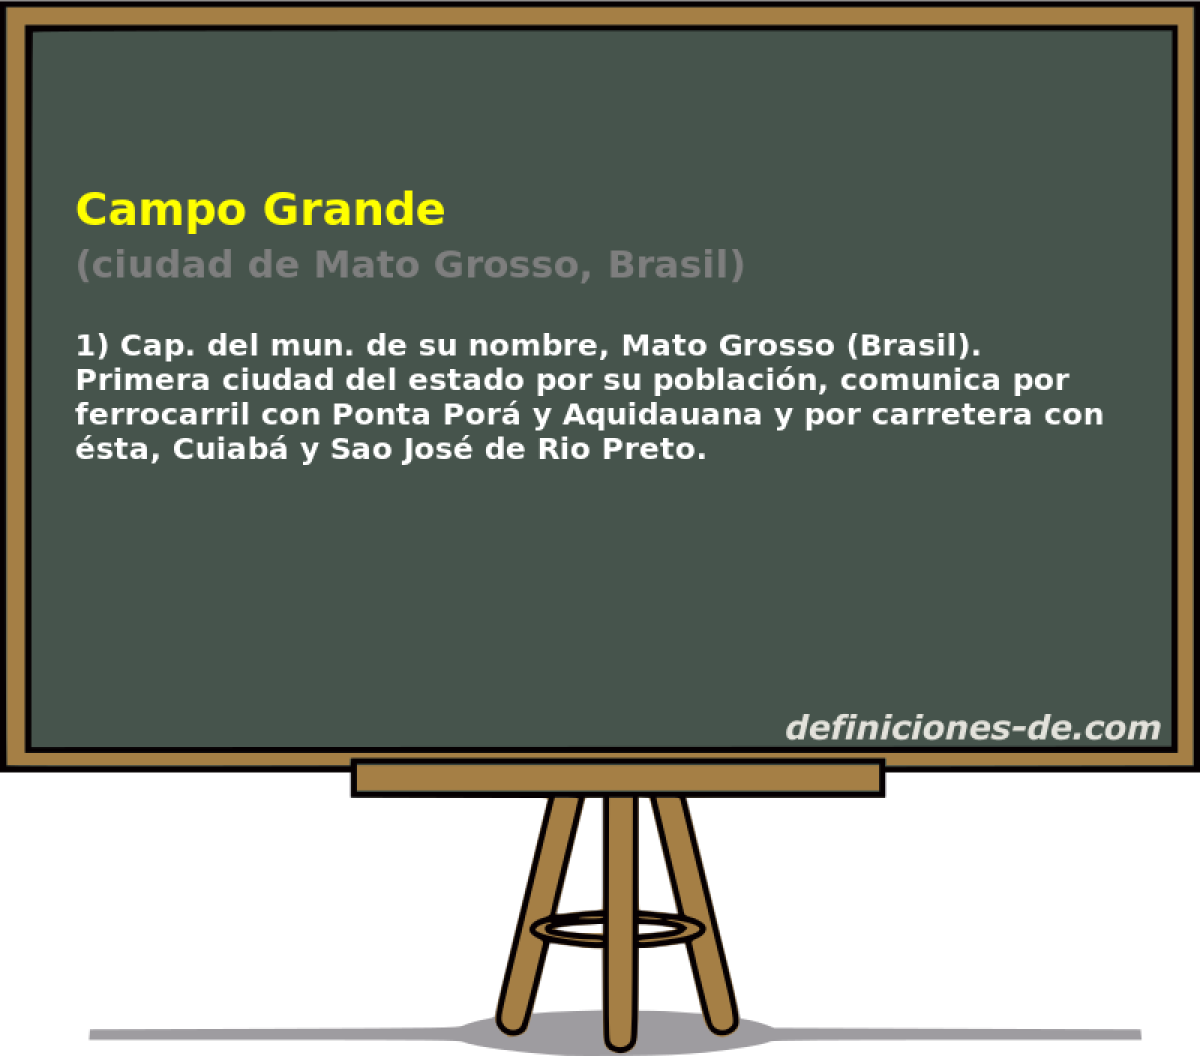 Campo Grande (ciudad de Mato Grosso, Brasil)